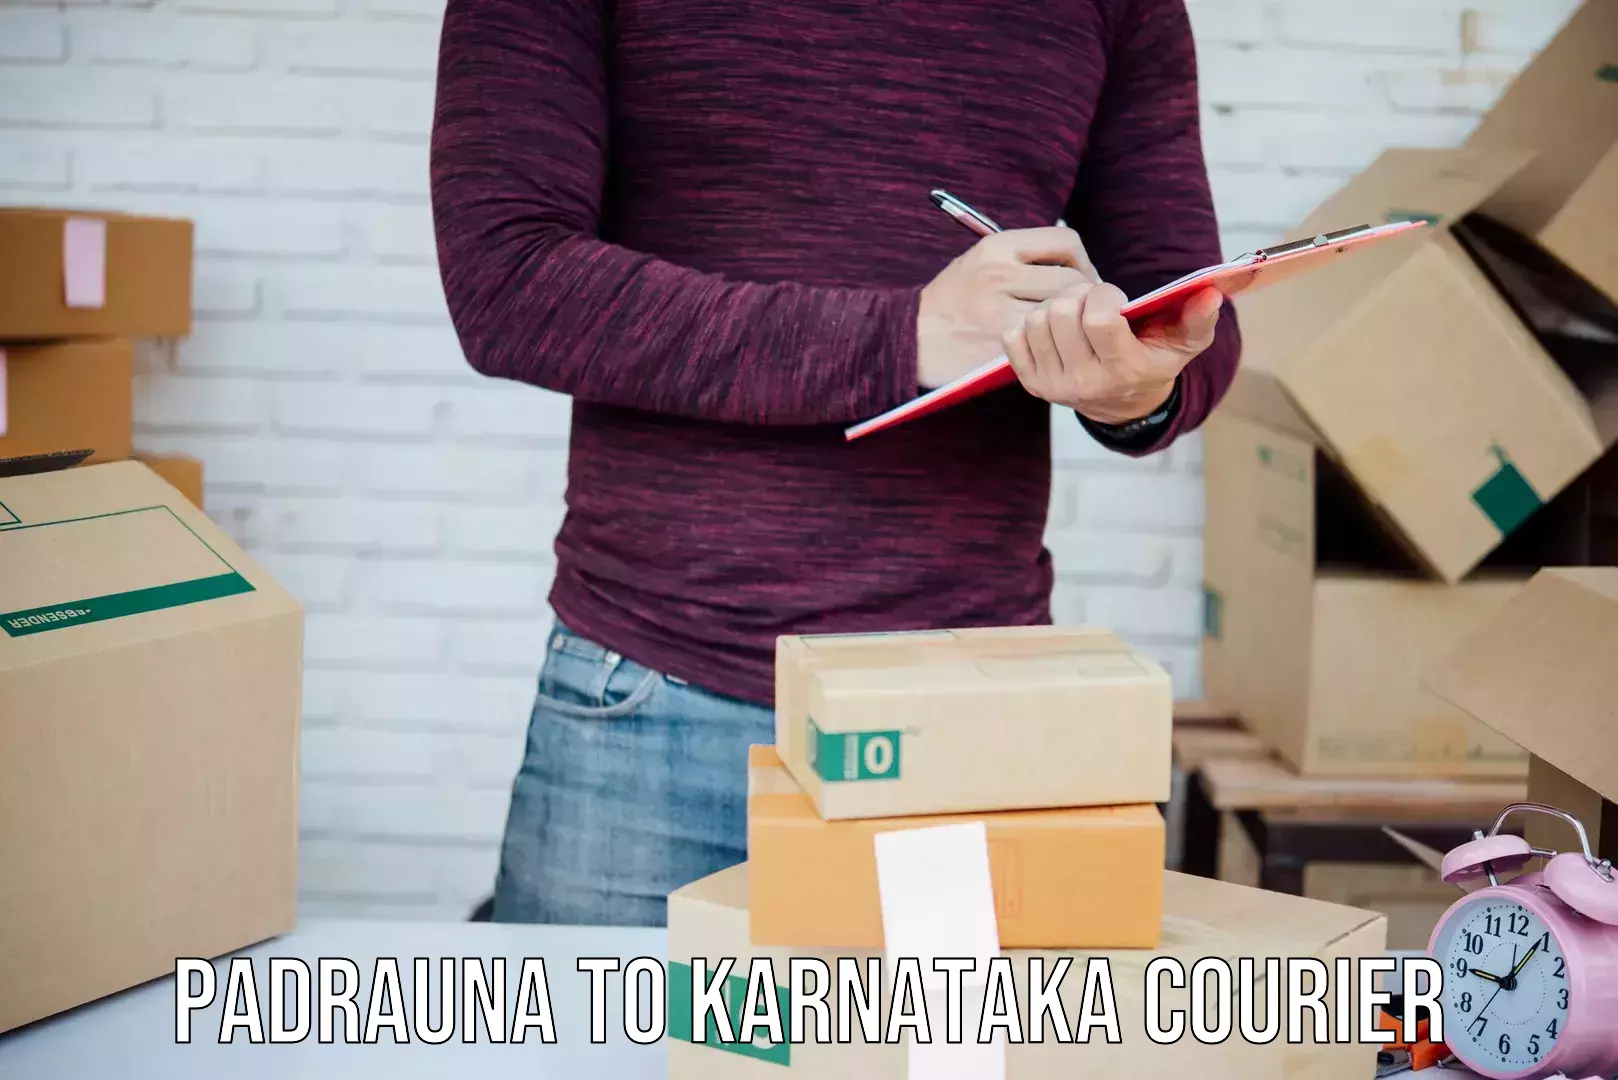 Shipping and handling Padrauna to Karnataka